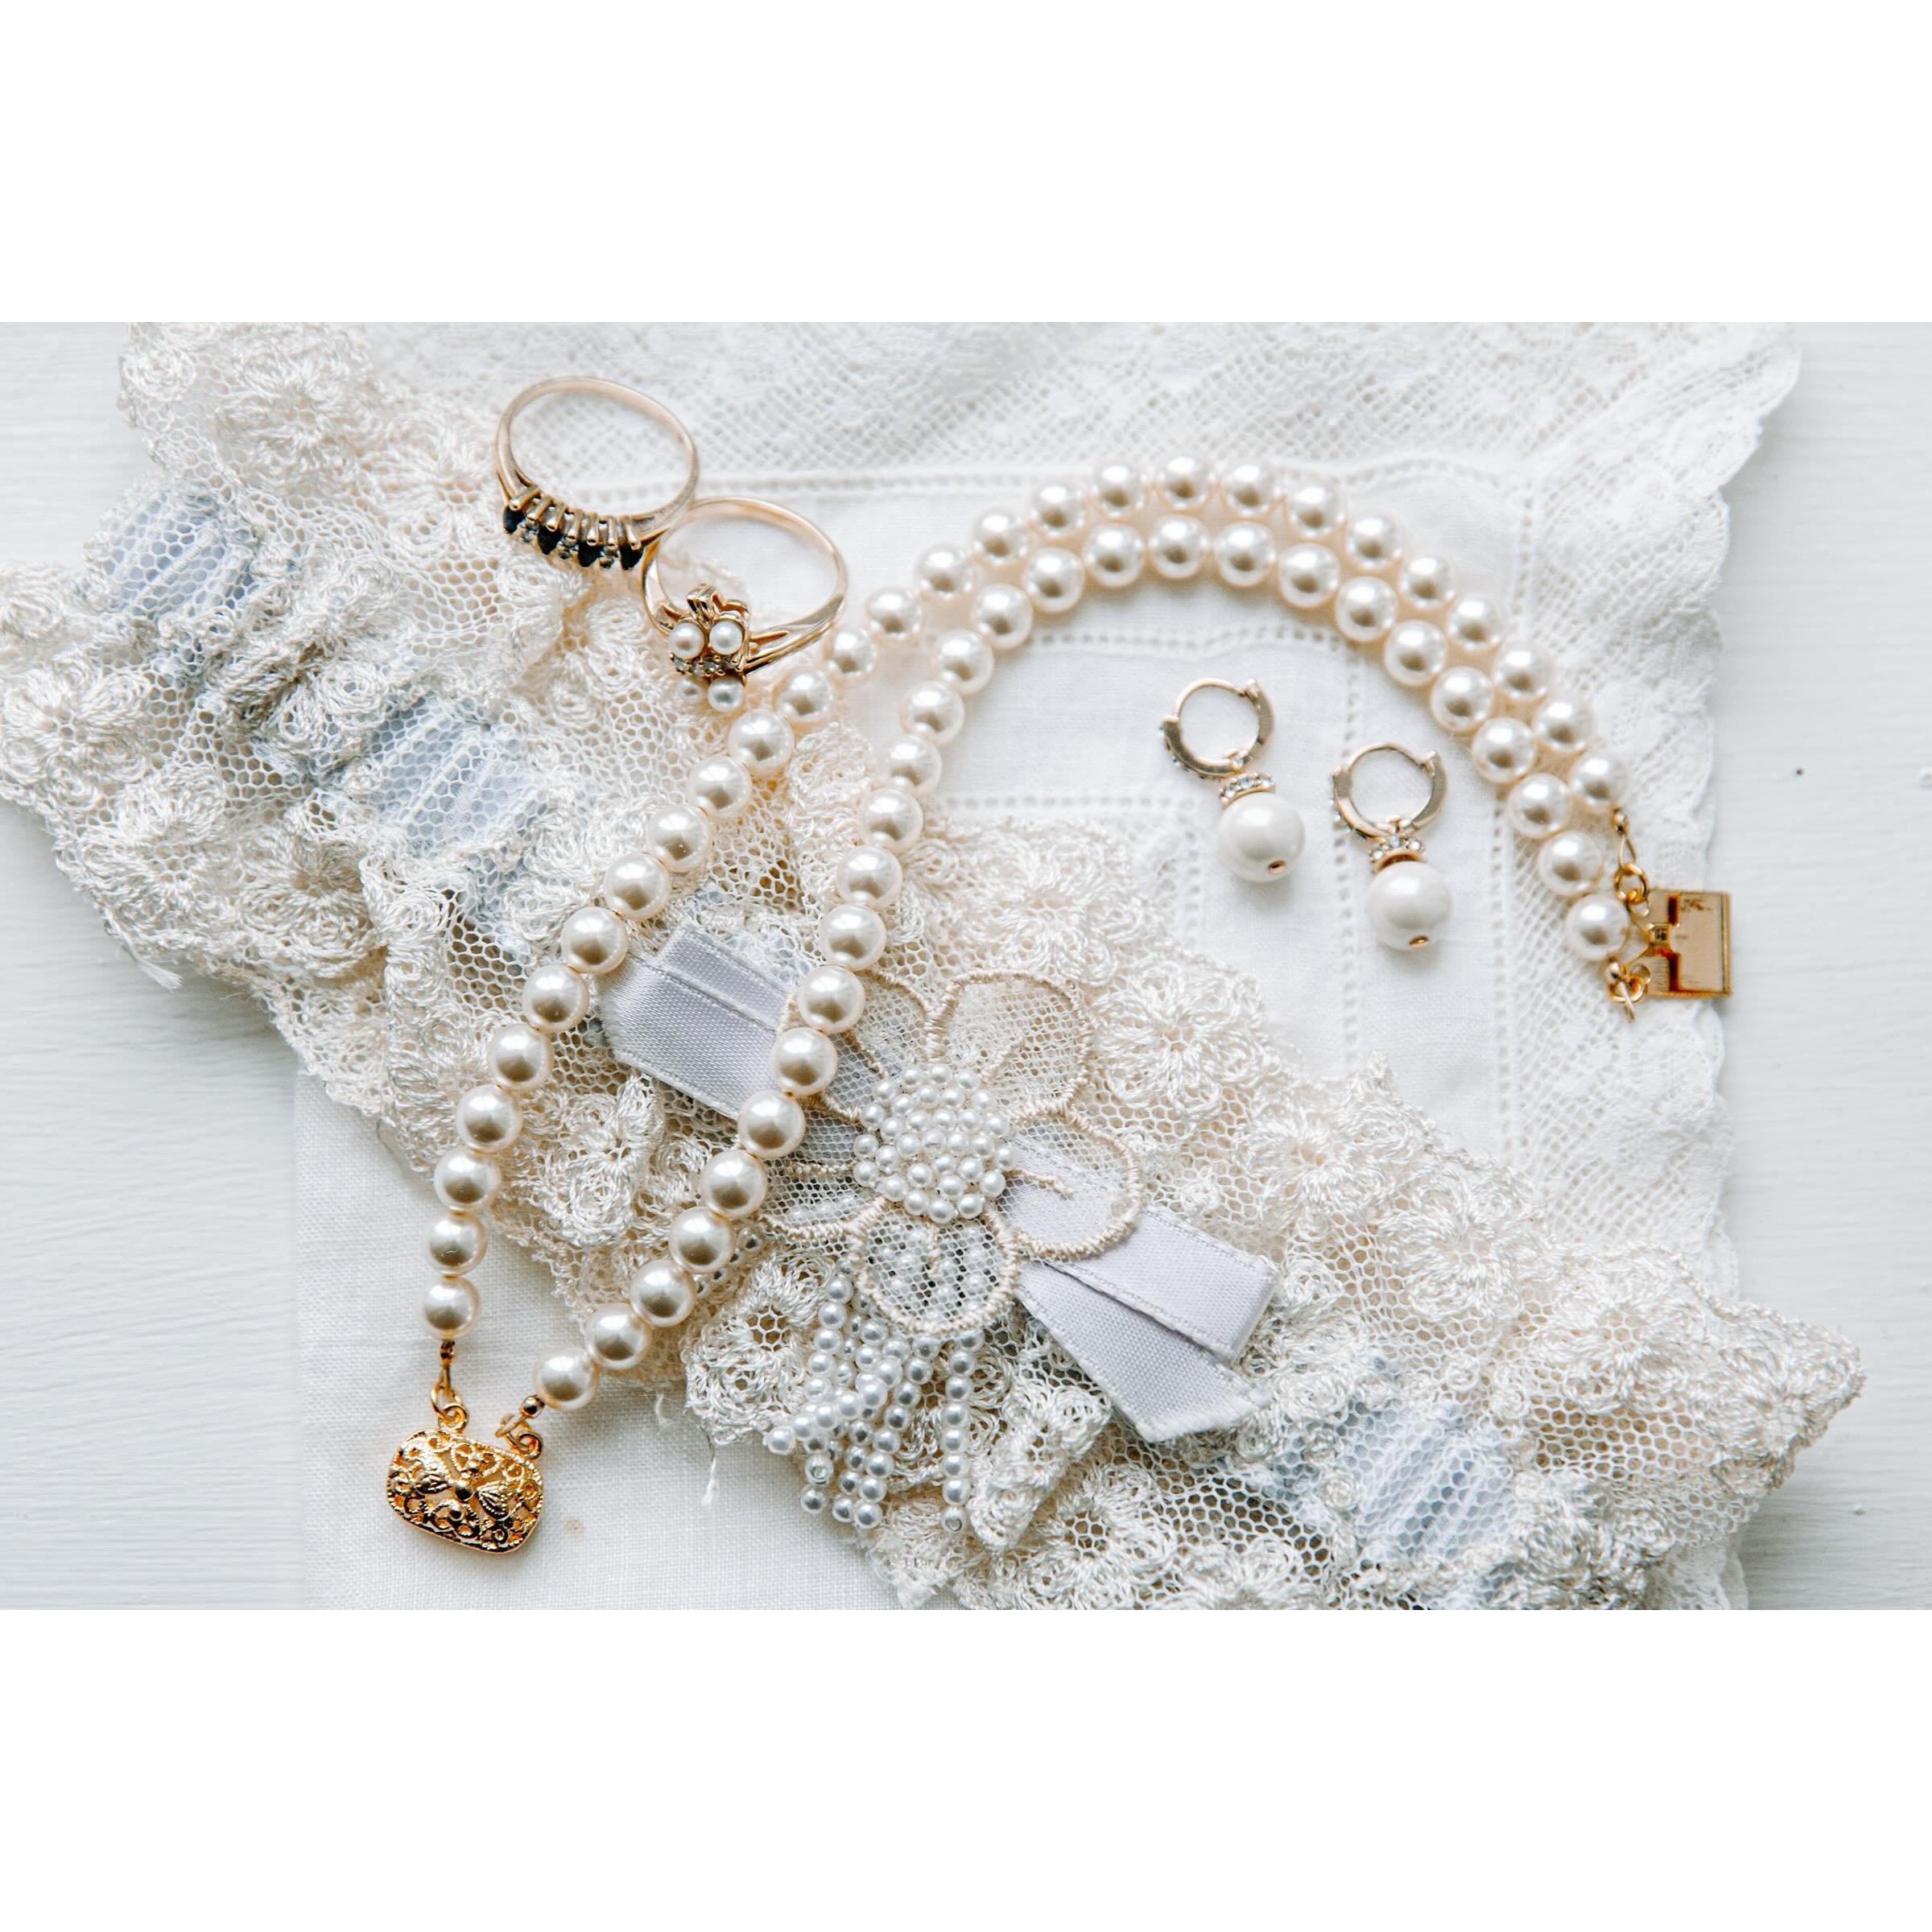 All In The Details ✨

#bridaljewelry #bridalgarter #weddingdetailsphotography #dmvweddingphotography #virginiaweddingphoto